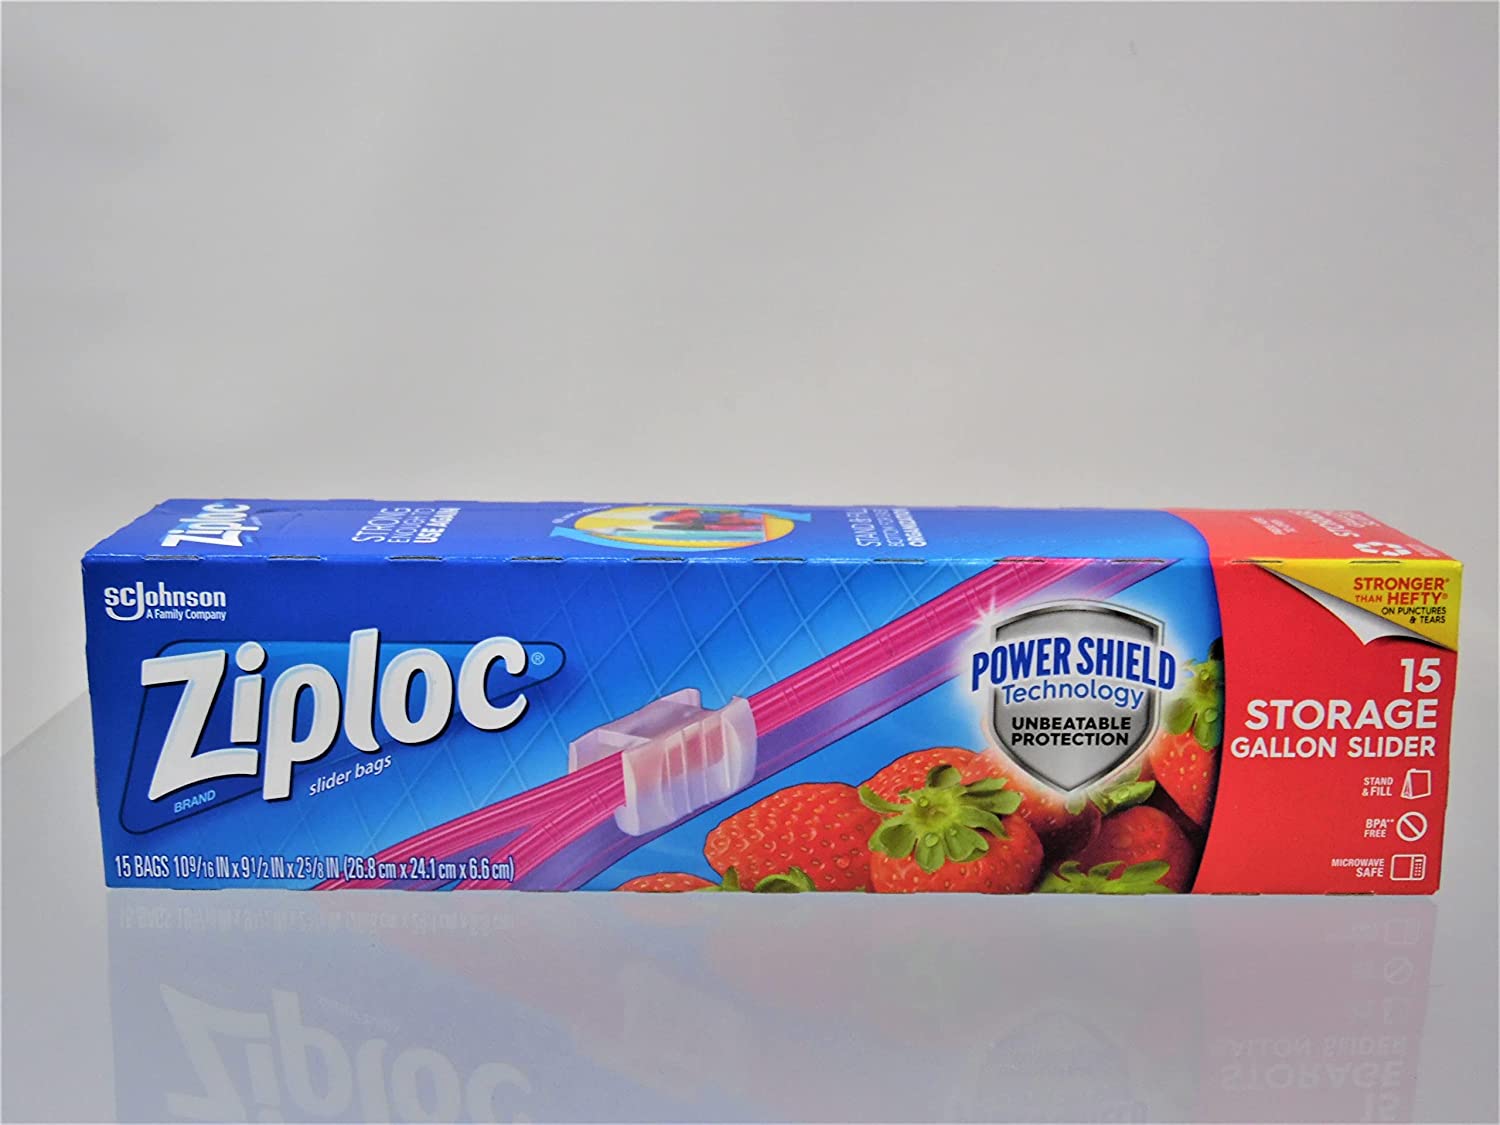 Ziploc Slider Storage Gallon Bags With Power Shield Technology